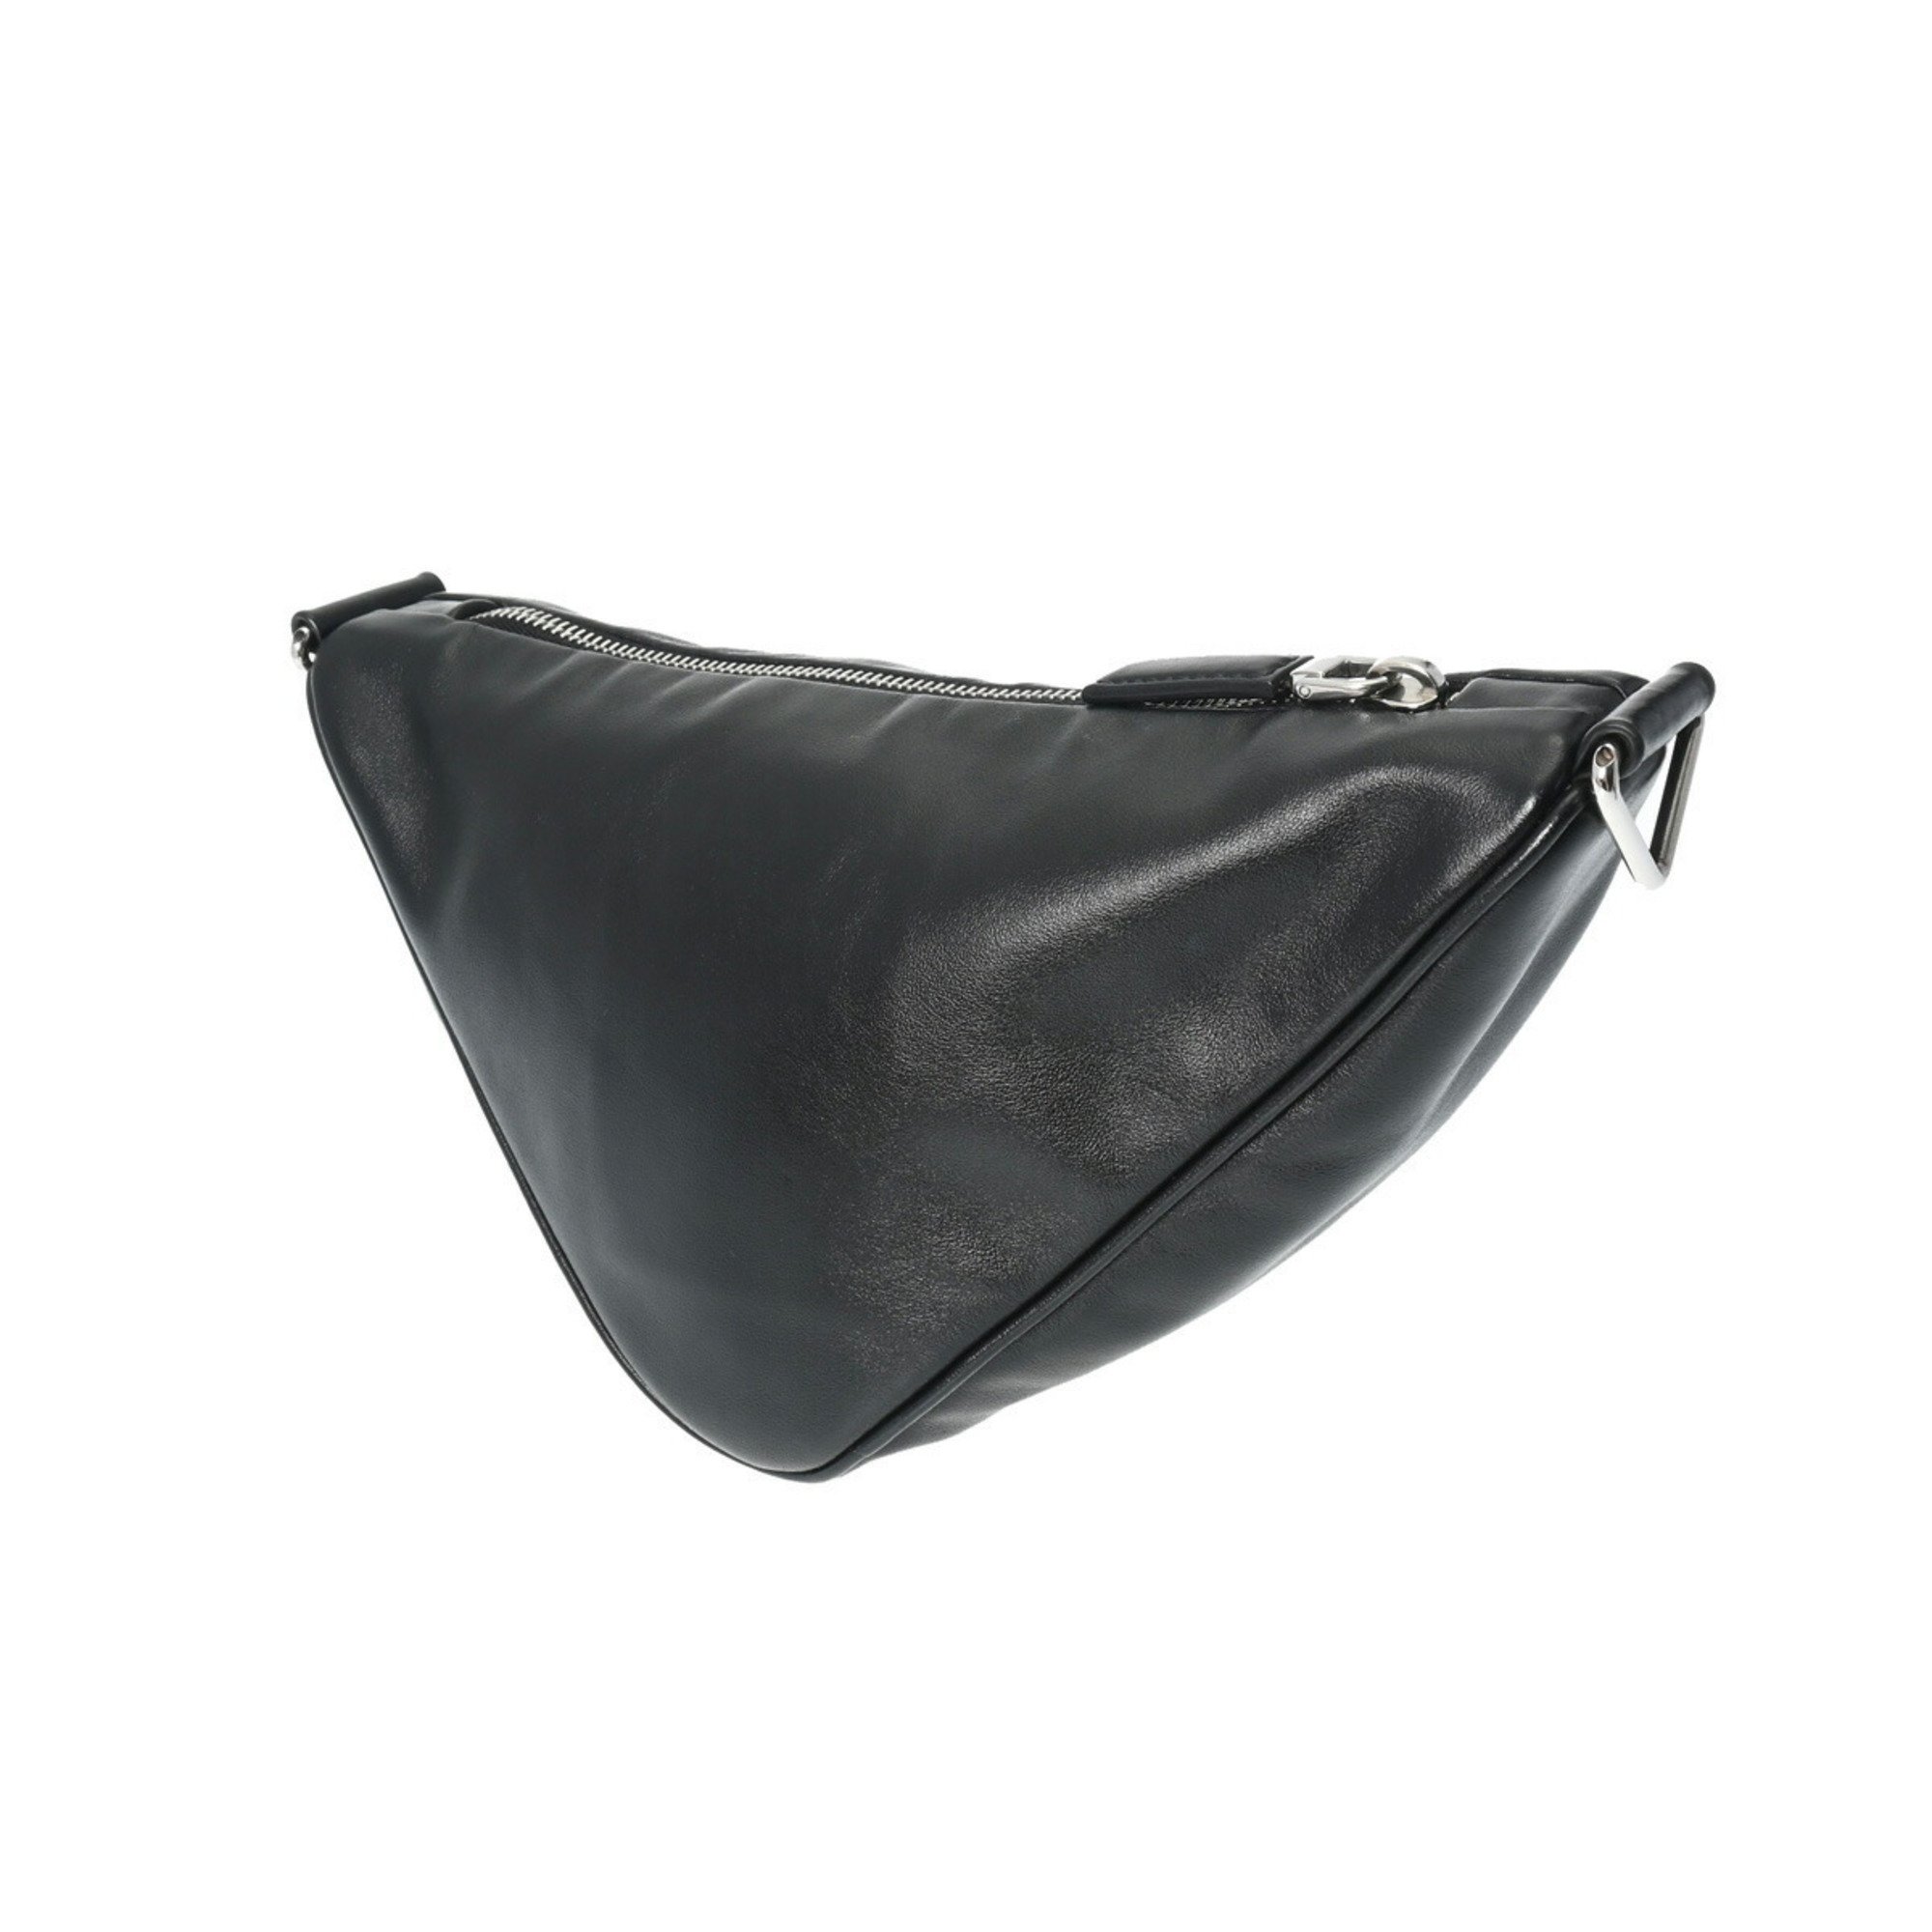 PRADA Prada Triangle Black Women's Leather Shoulder Bag